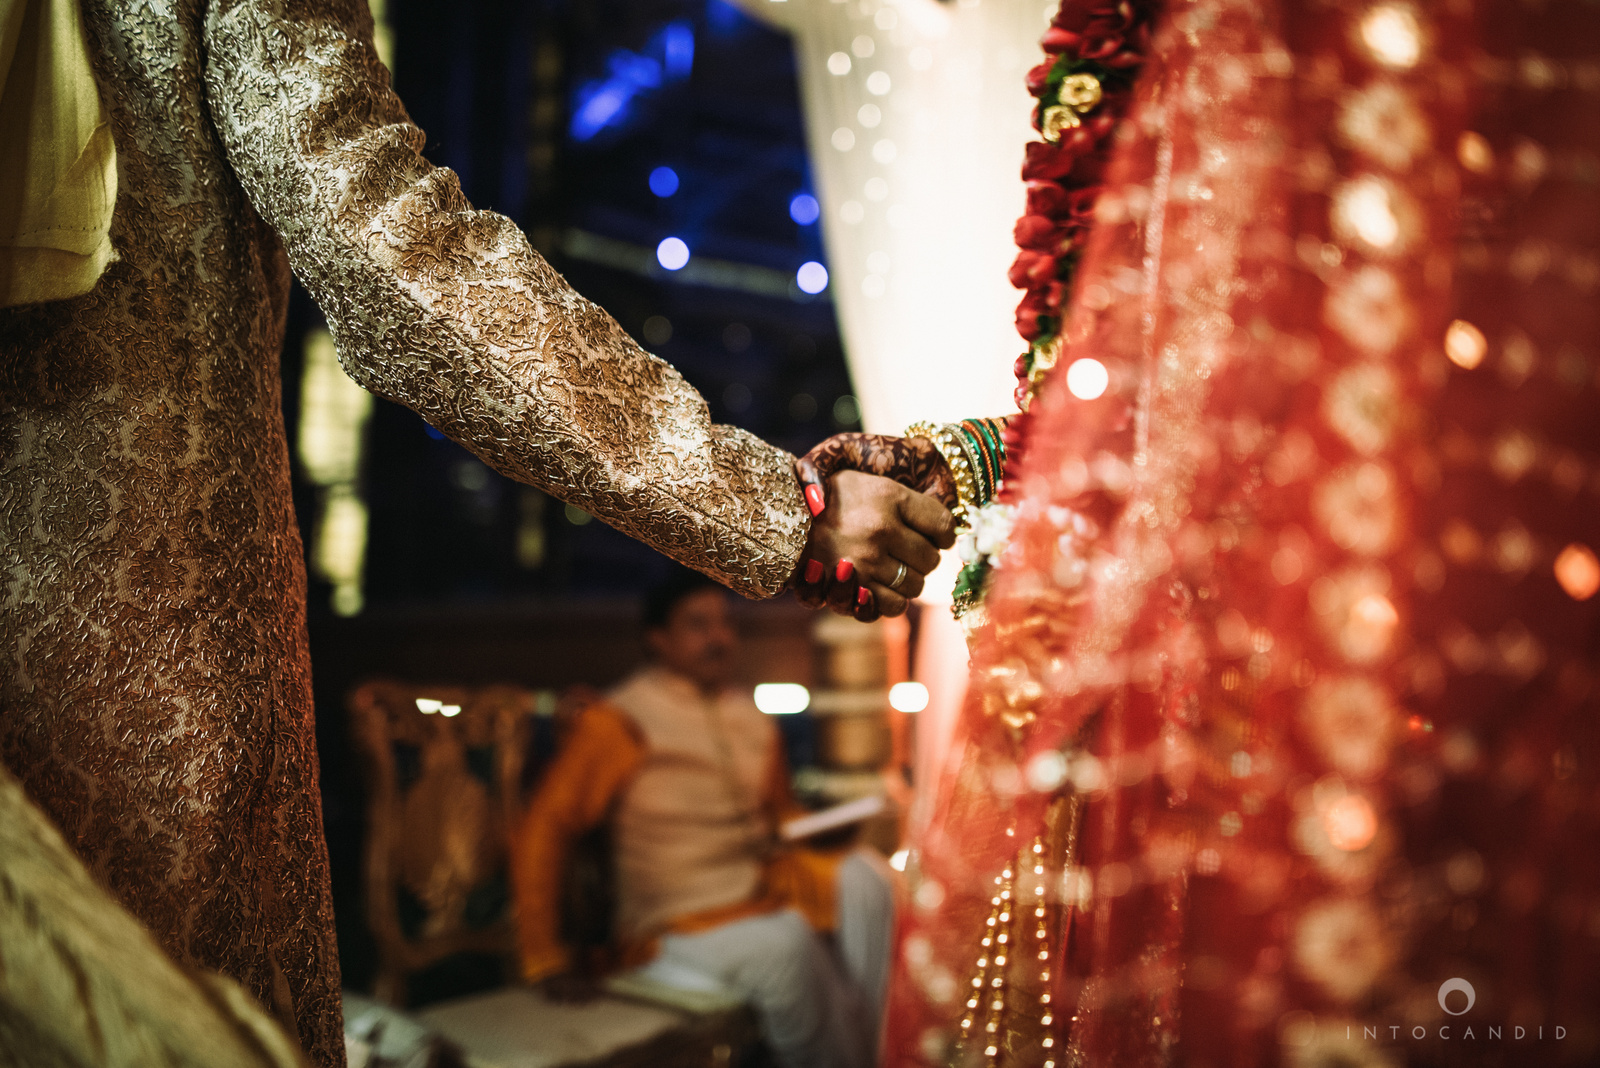 mumbai_wedding_photographer_intocandid_saharastar_ketan_manasvi_ts_029.jpg